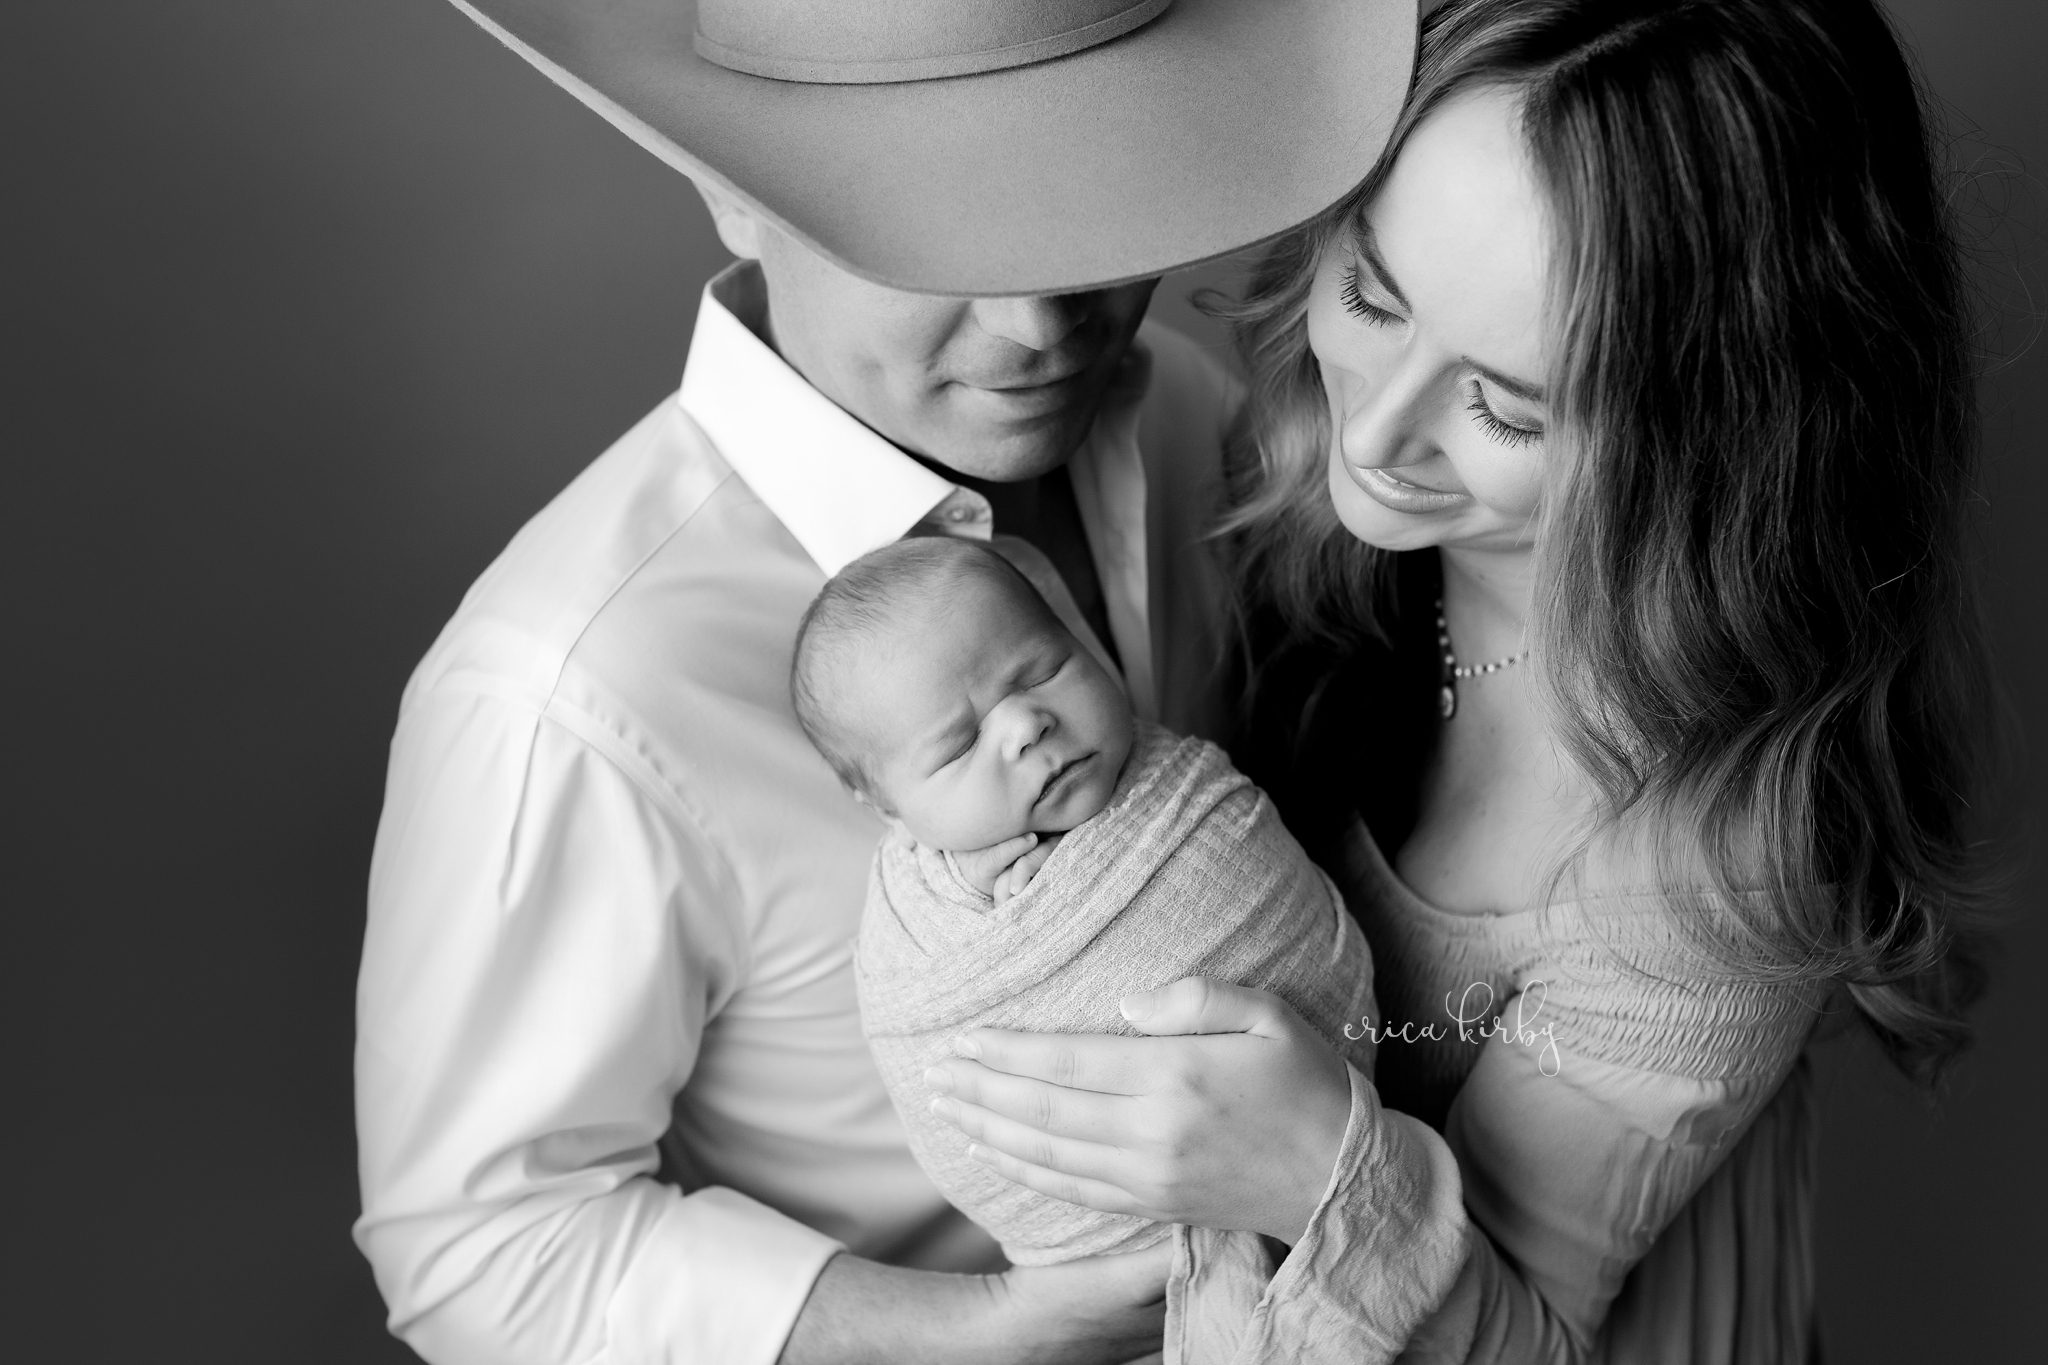 Northwest AR Newborn Baby Photographer - Erica Kirby Photography voted best baby and children's photographer